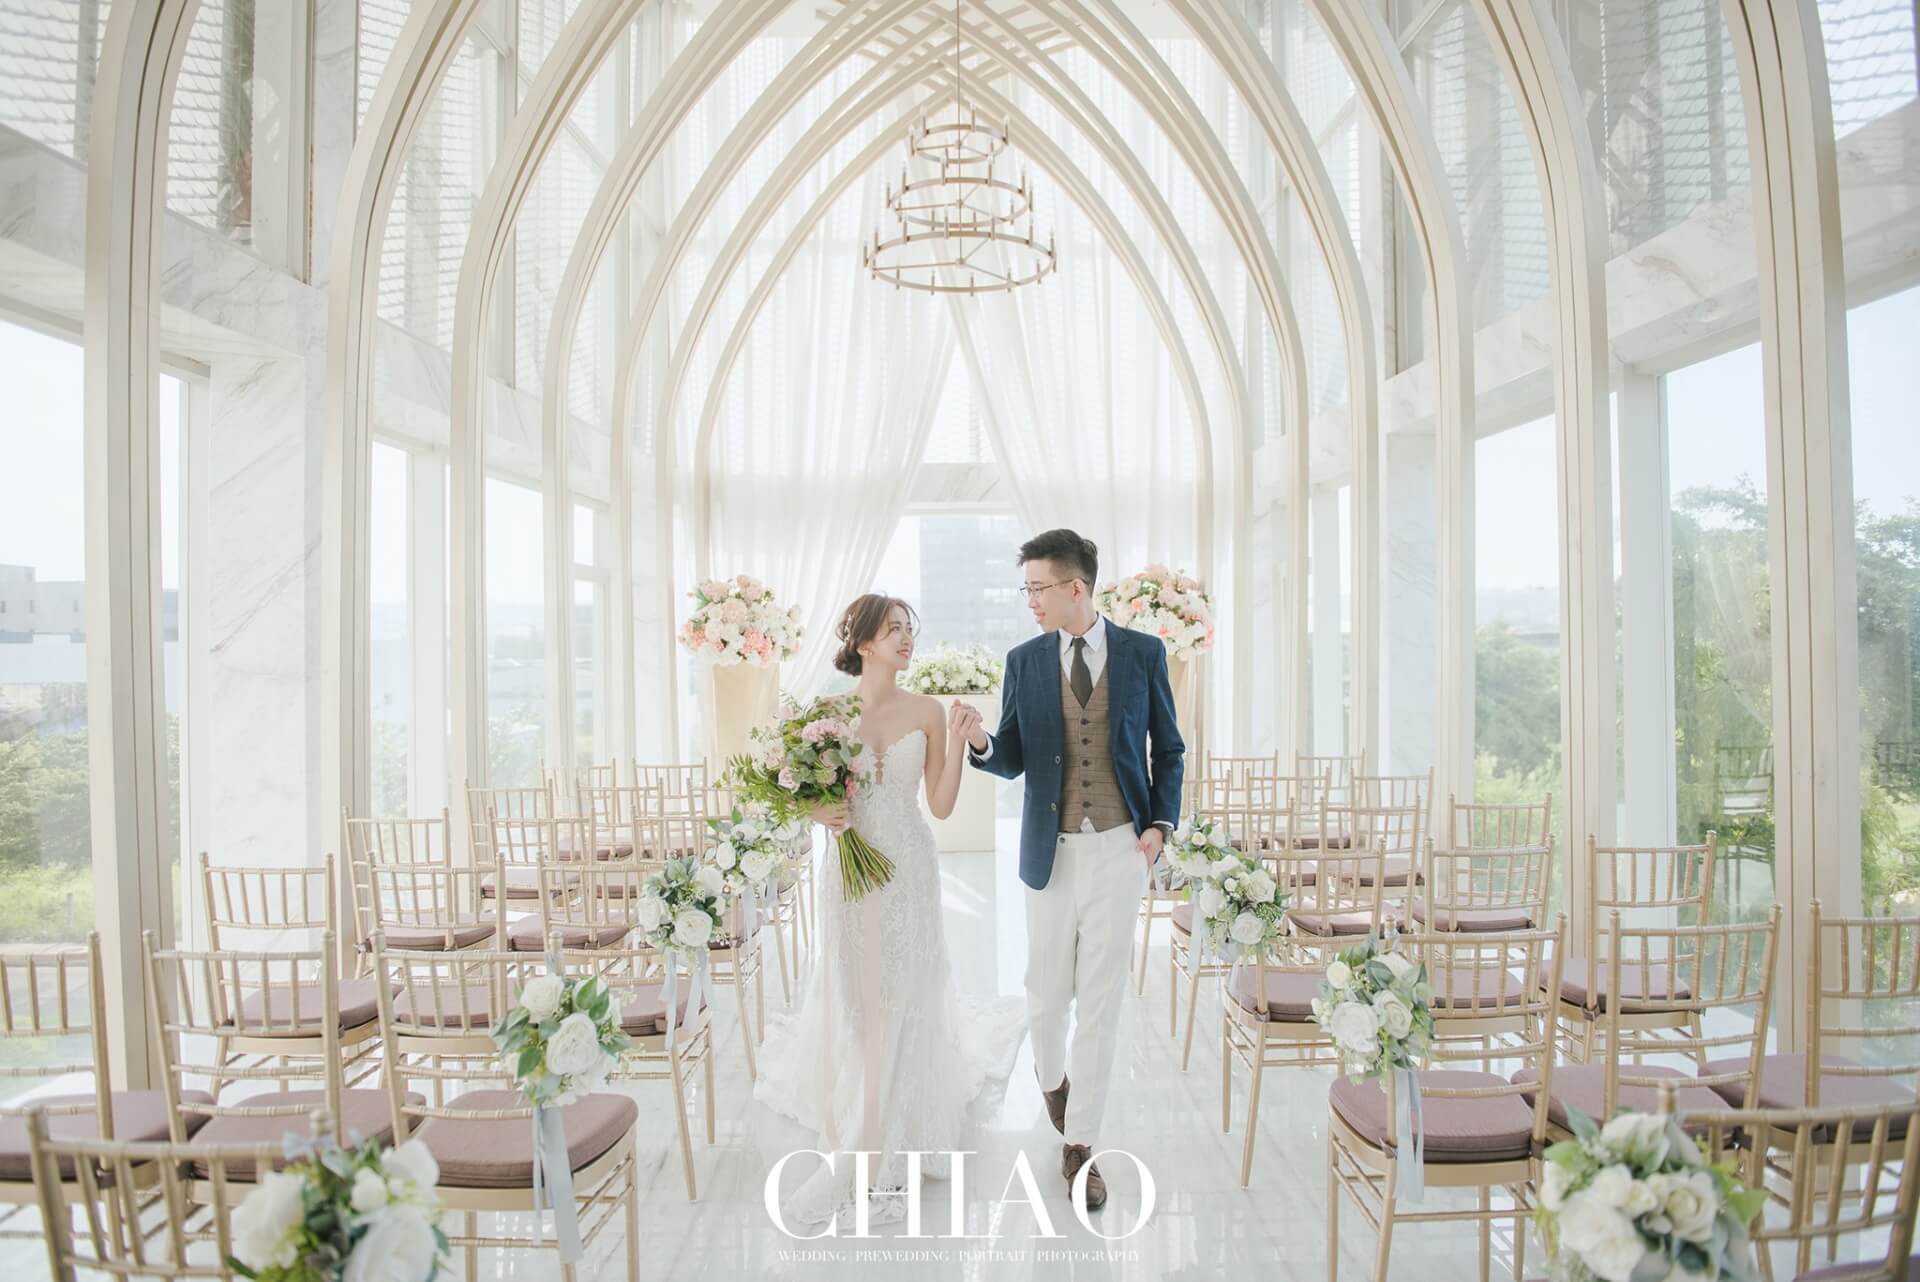 CHIAO Photo Studio / 穎盈 婚紗照分享